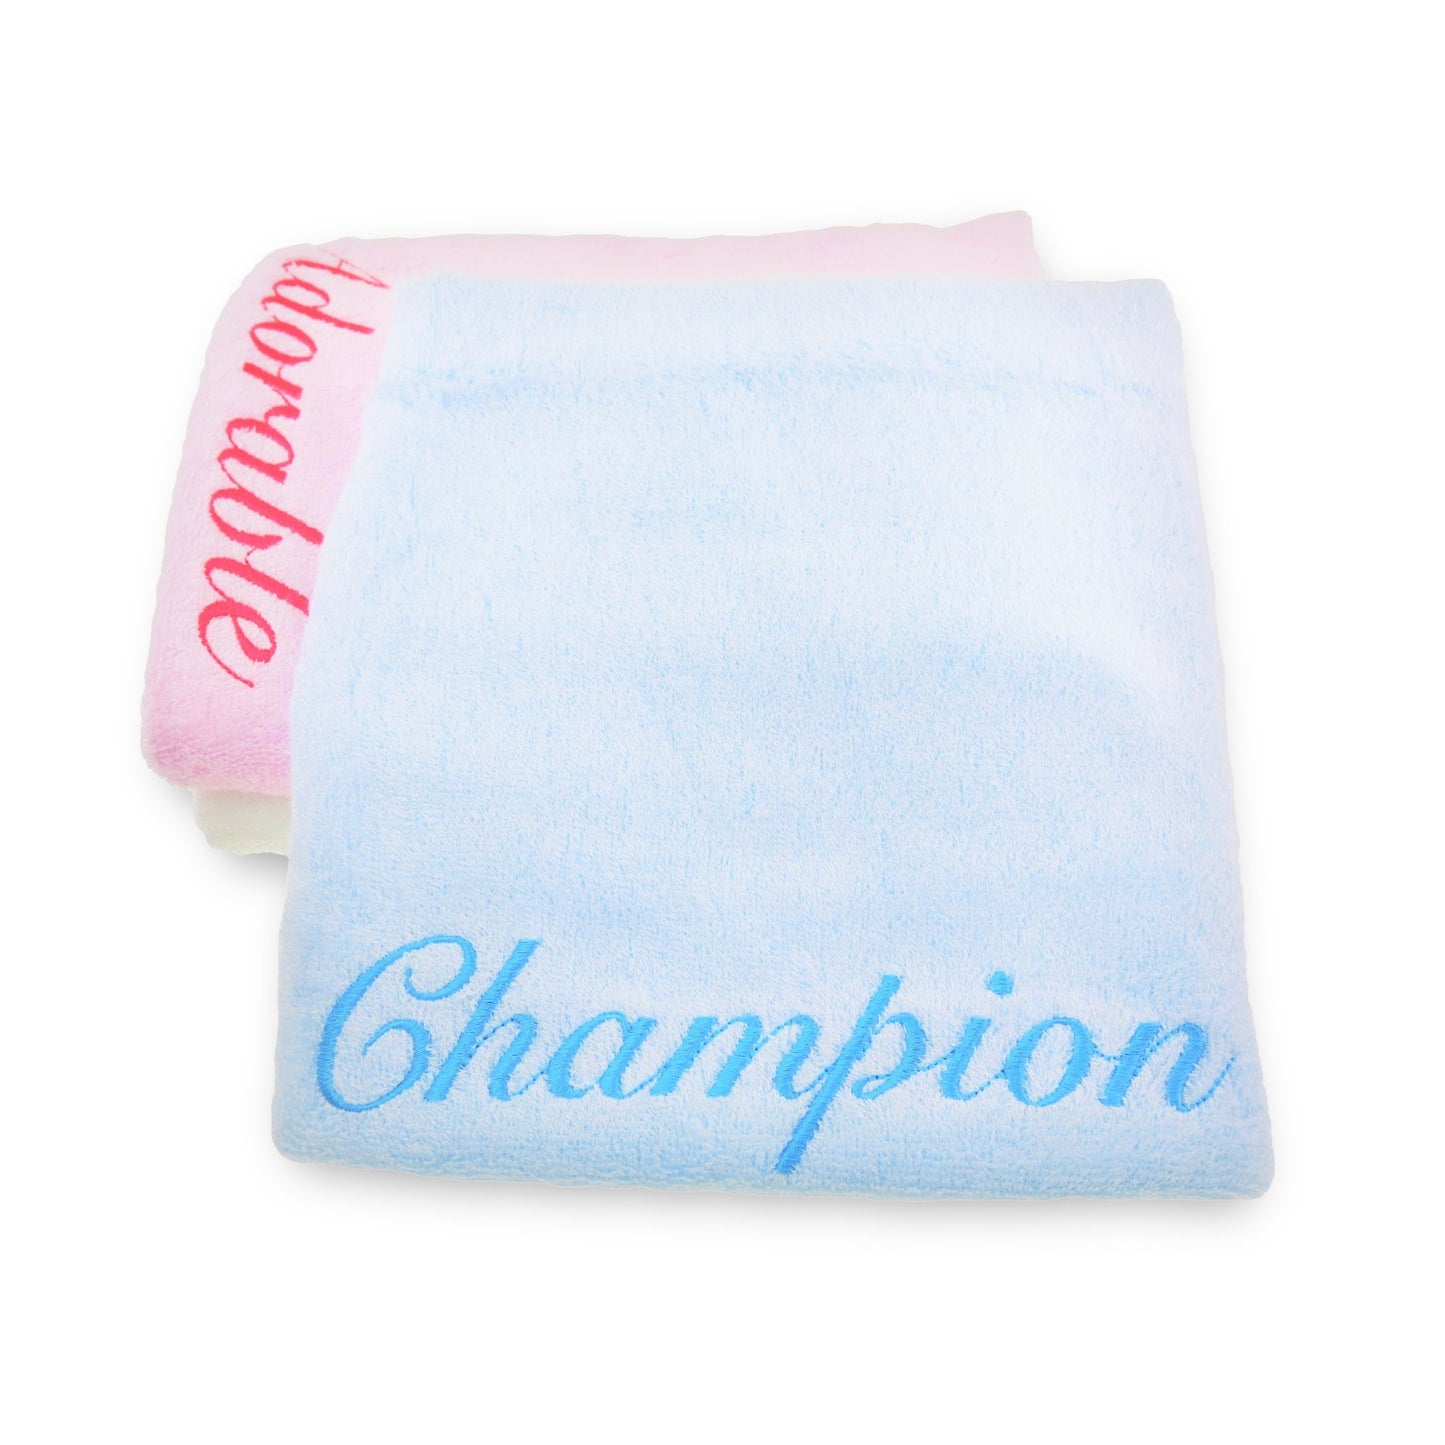 Champion - Embroidered Premium Bamboo Towel (120x60 cm), Blue